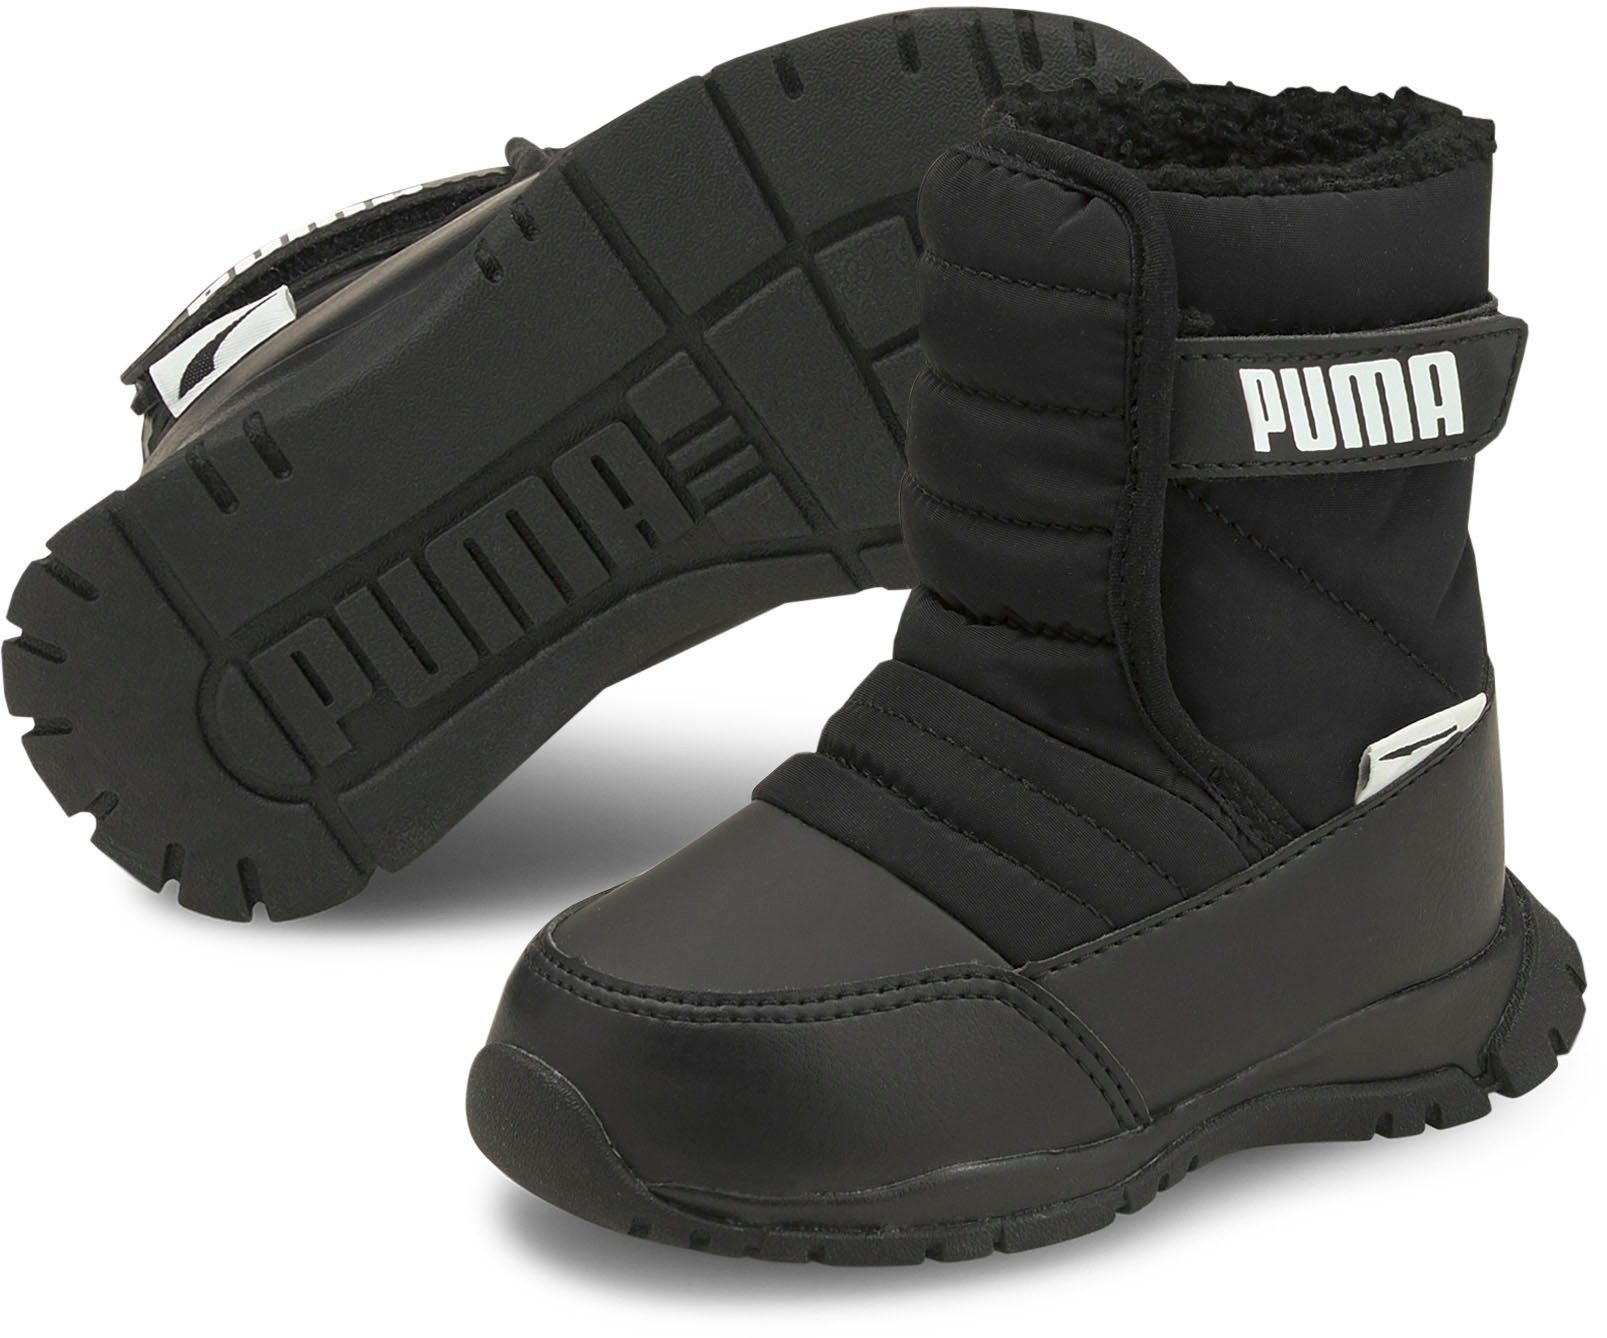 Puma NIEVE BOOT mit Black-Puma PUMA AC White INF Sneaker Klettverschluss WTR